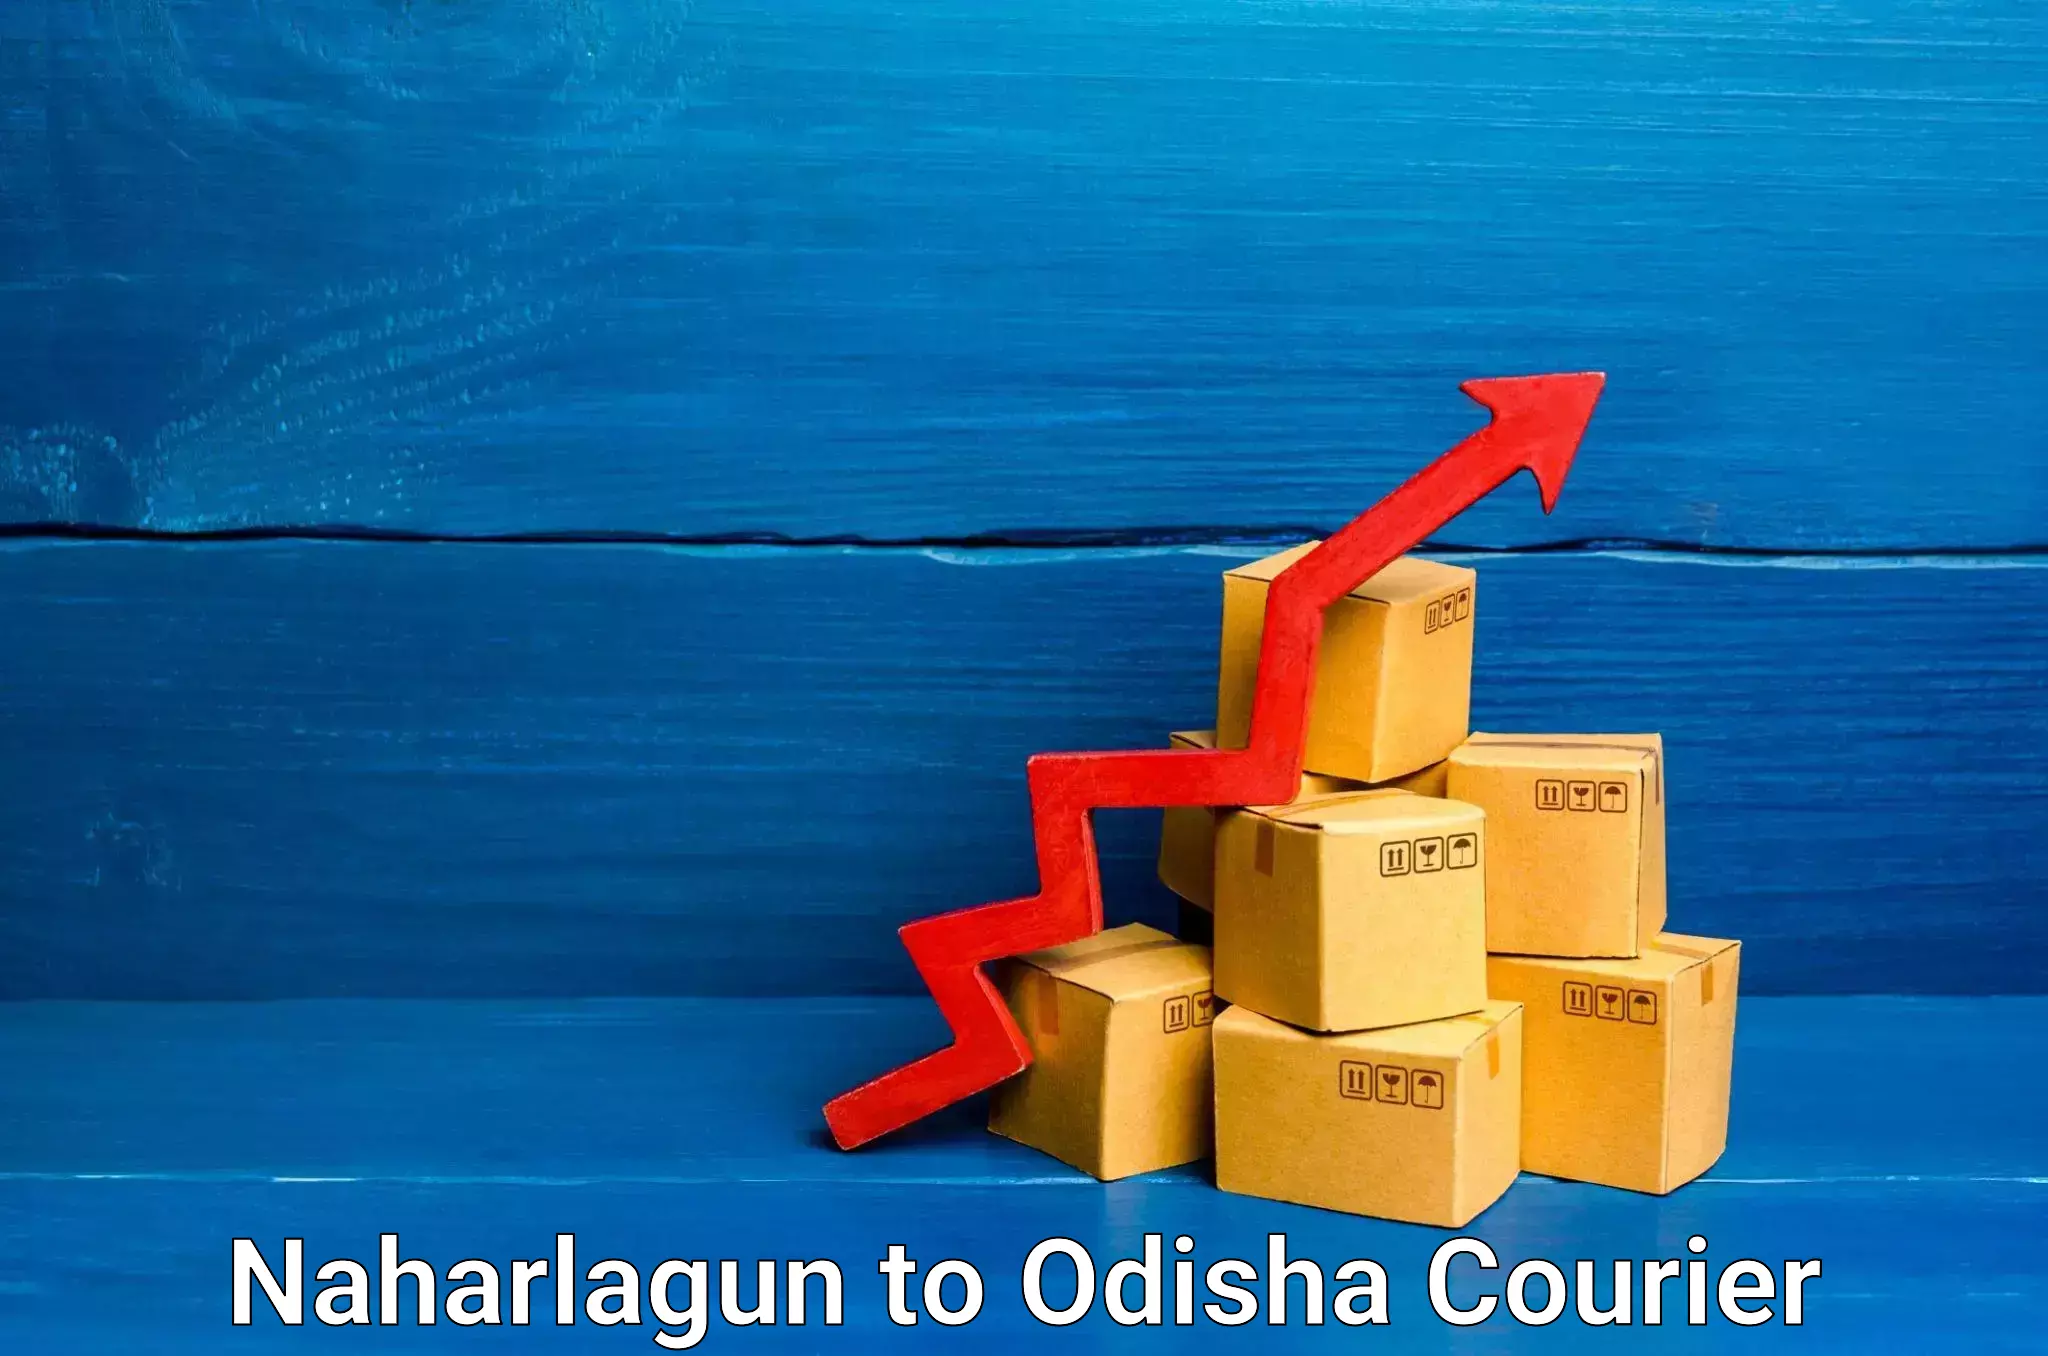 Courier service comparison in Naharlagun to Baisinga